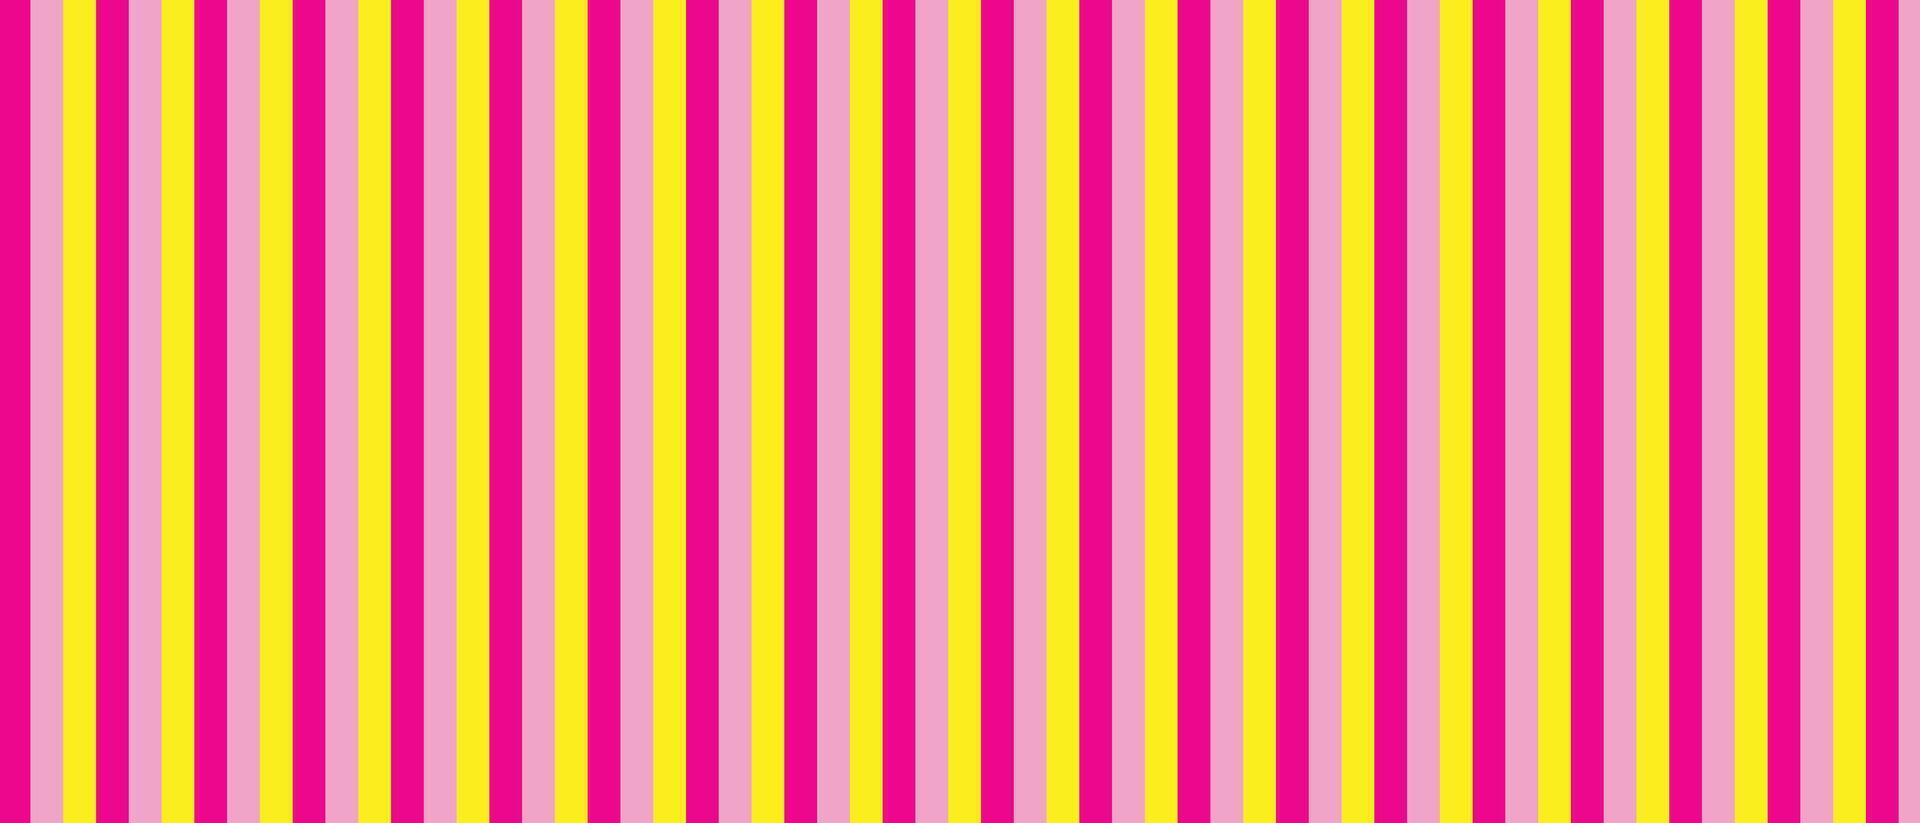 abstract geometric line pattern art illustration vector